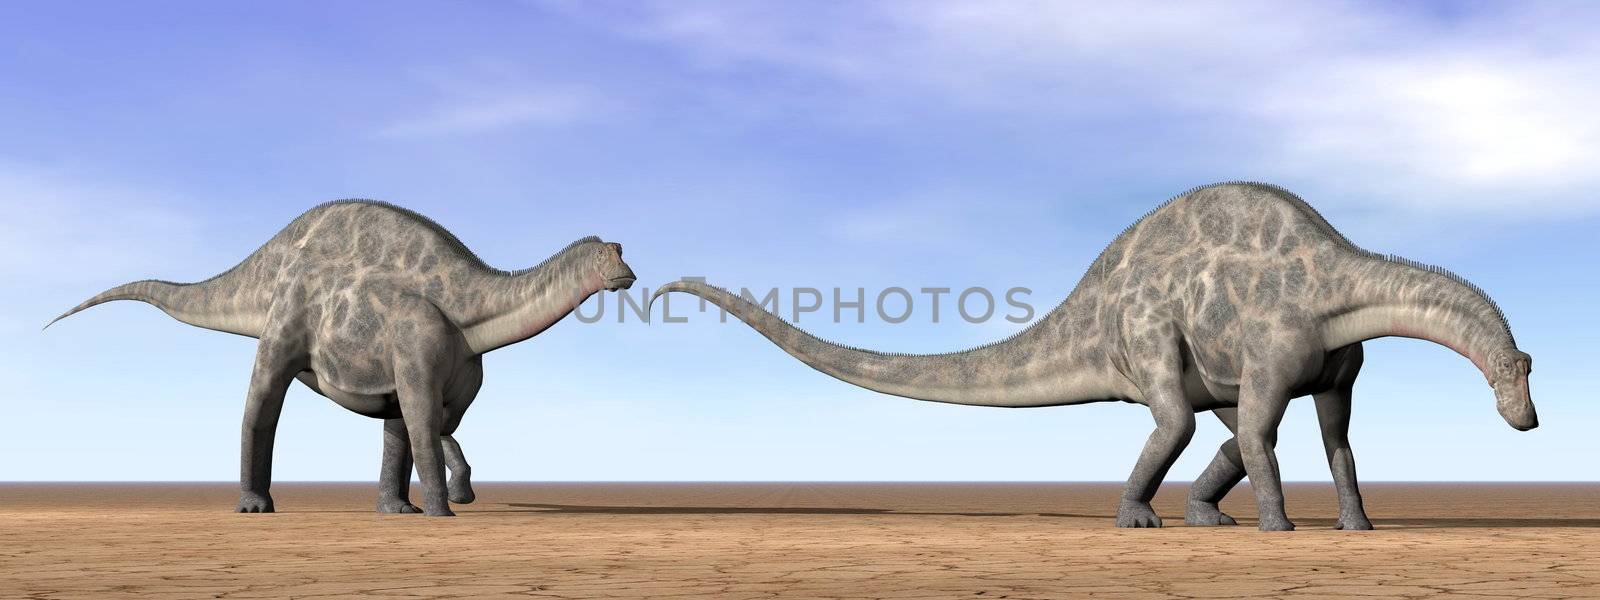 Two dicraeosaurus dinosaurs standing in the desert by daylight